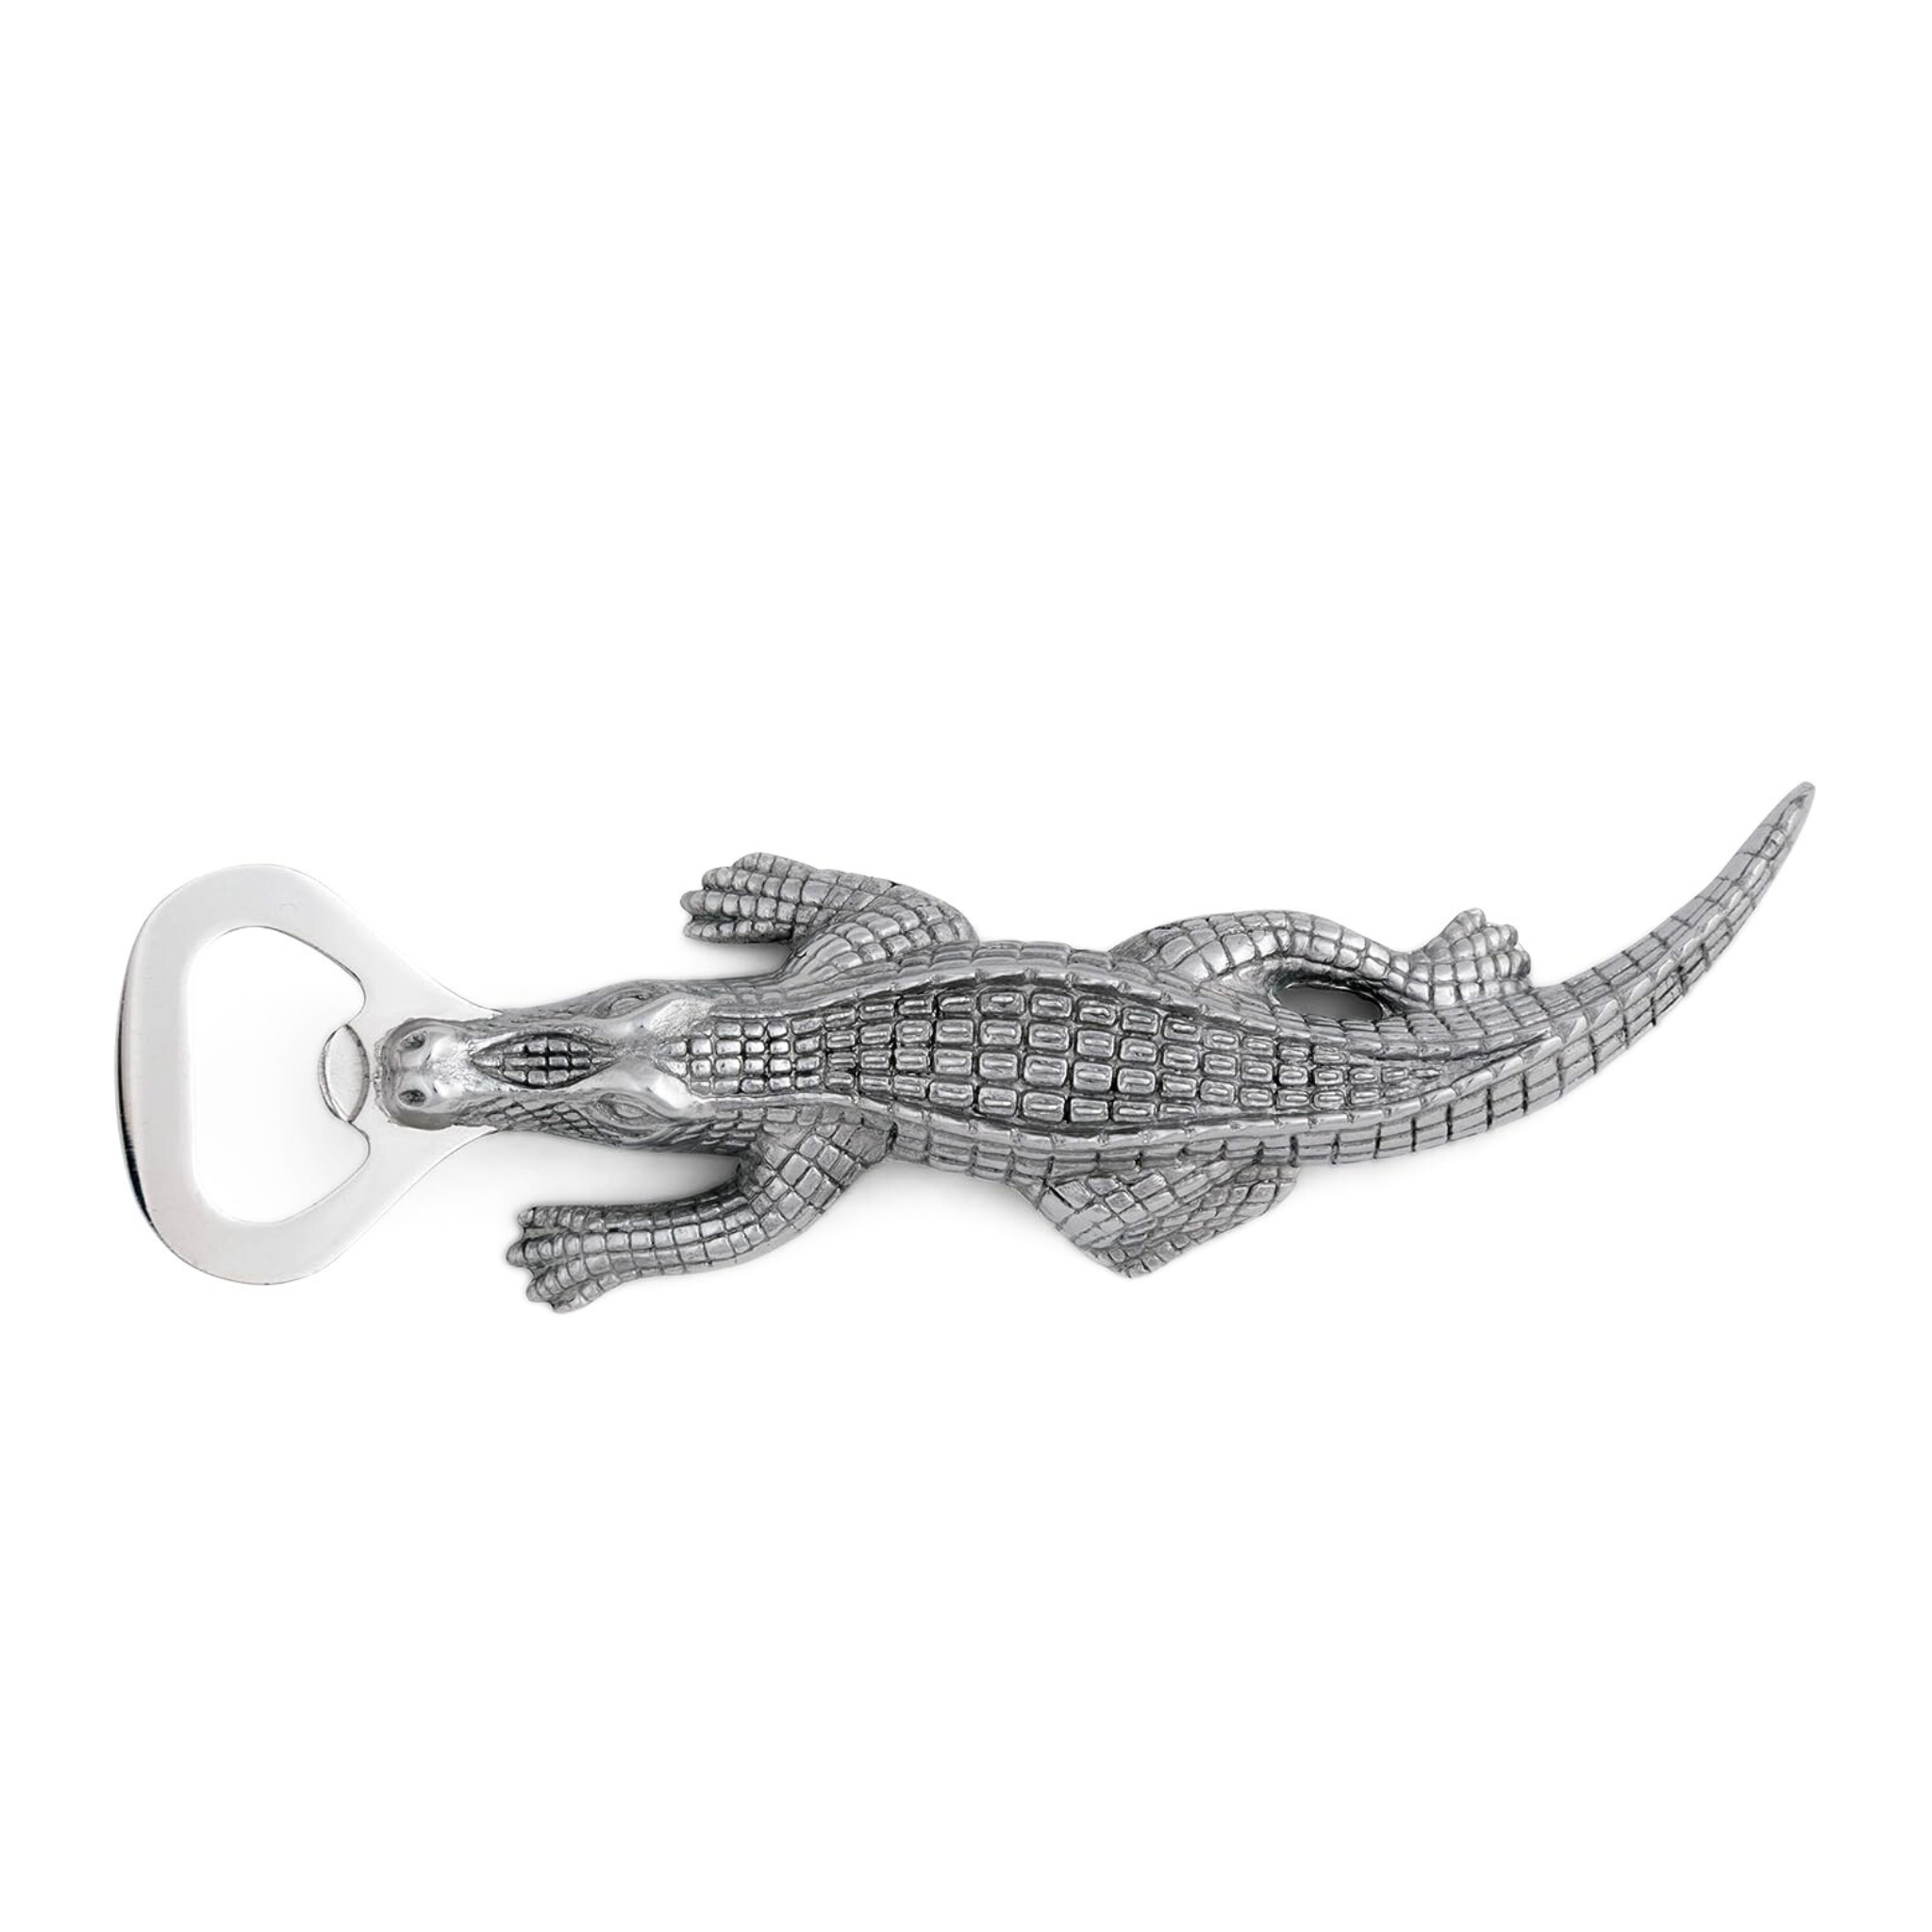 a pewter alligator bottle opener on a white background